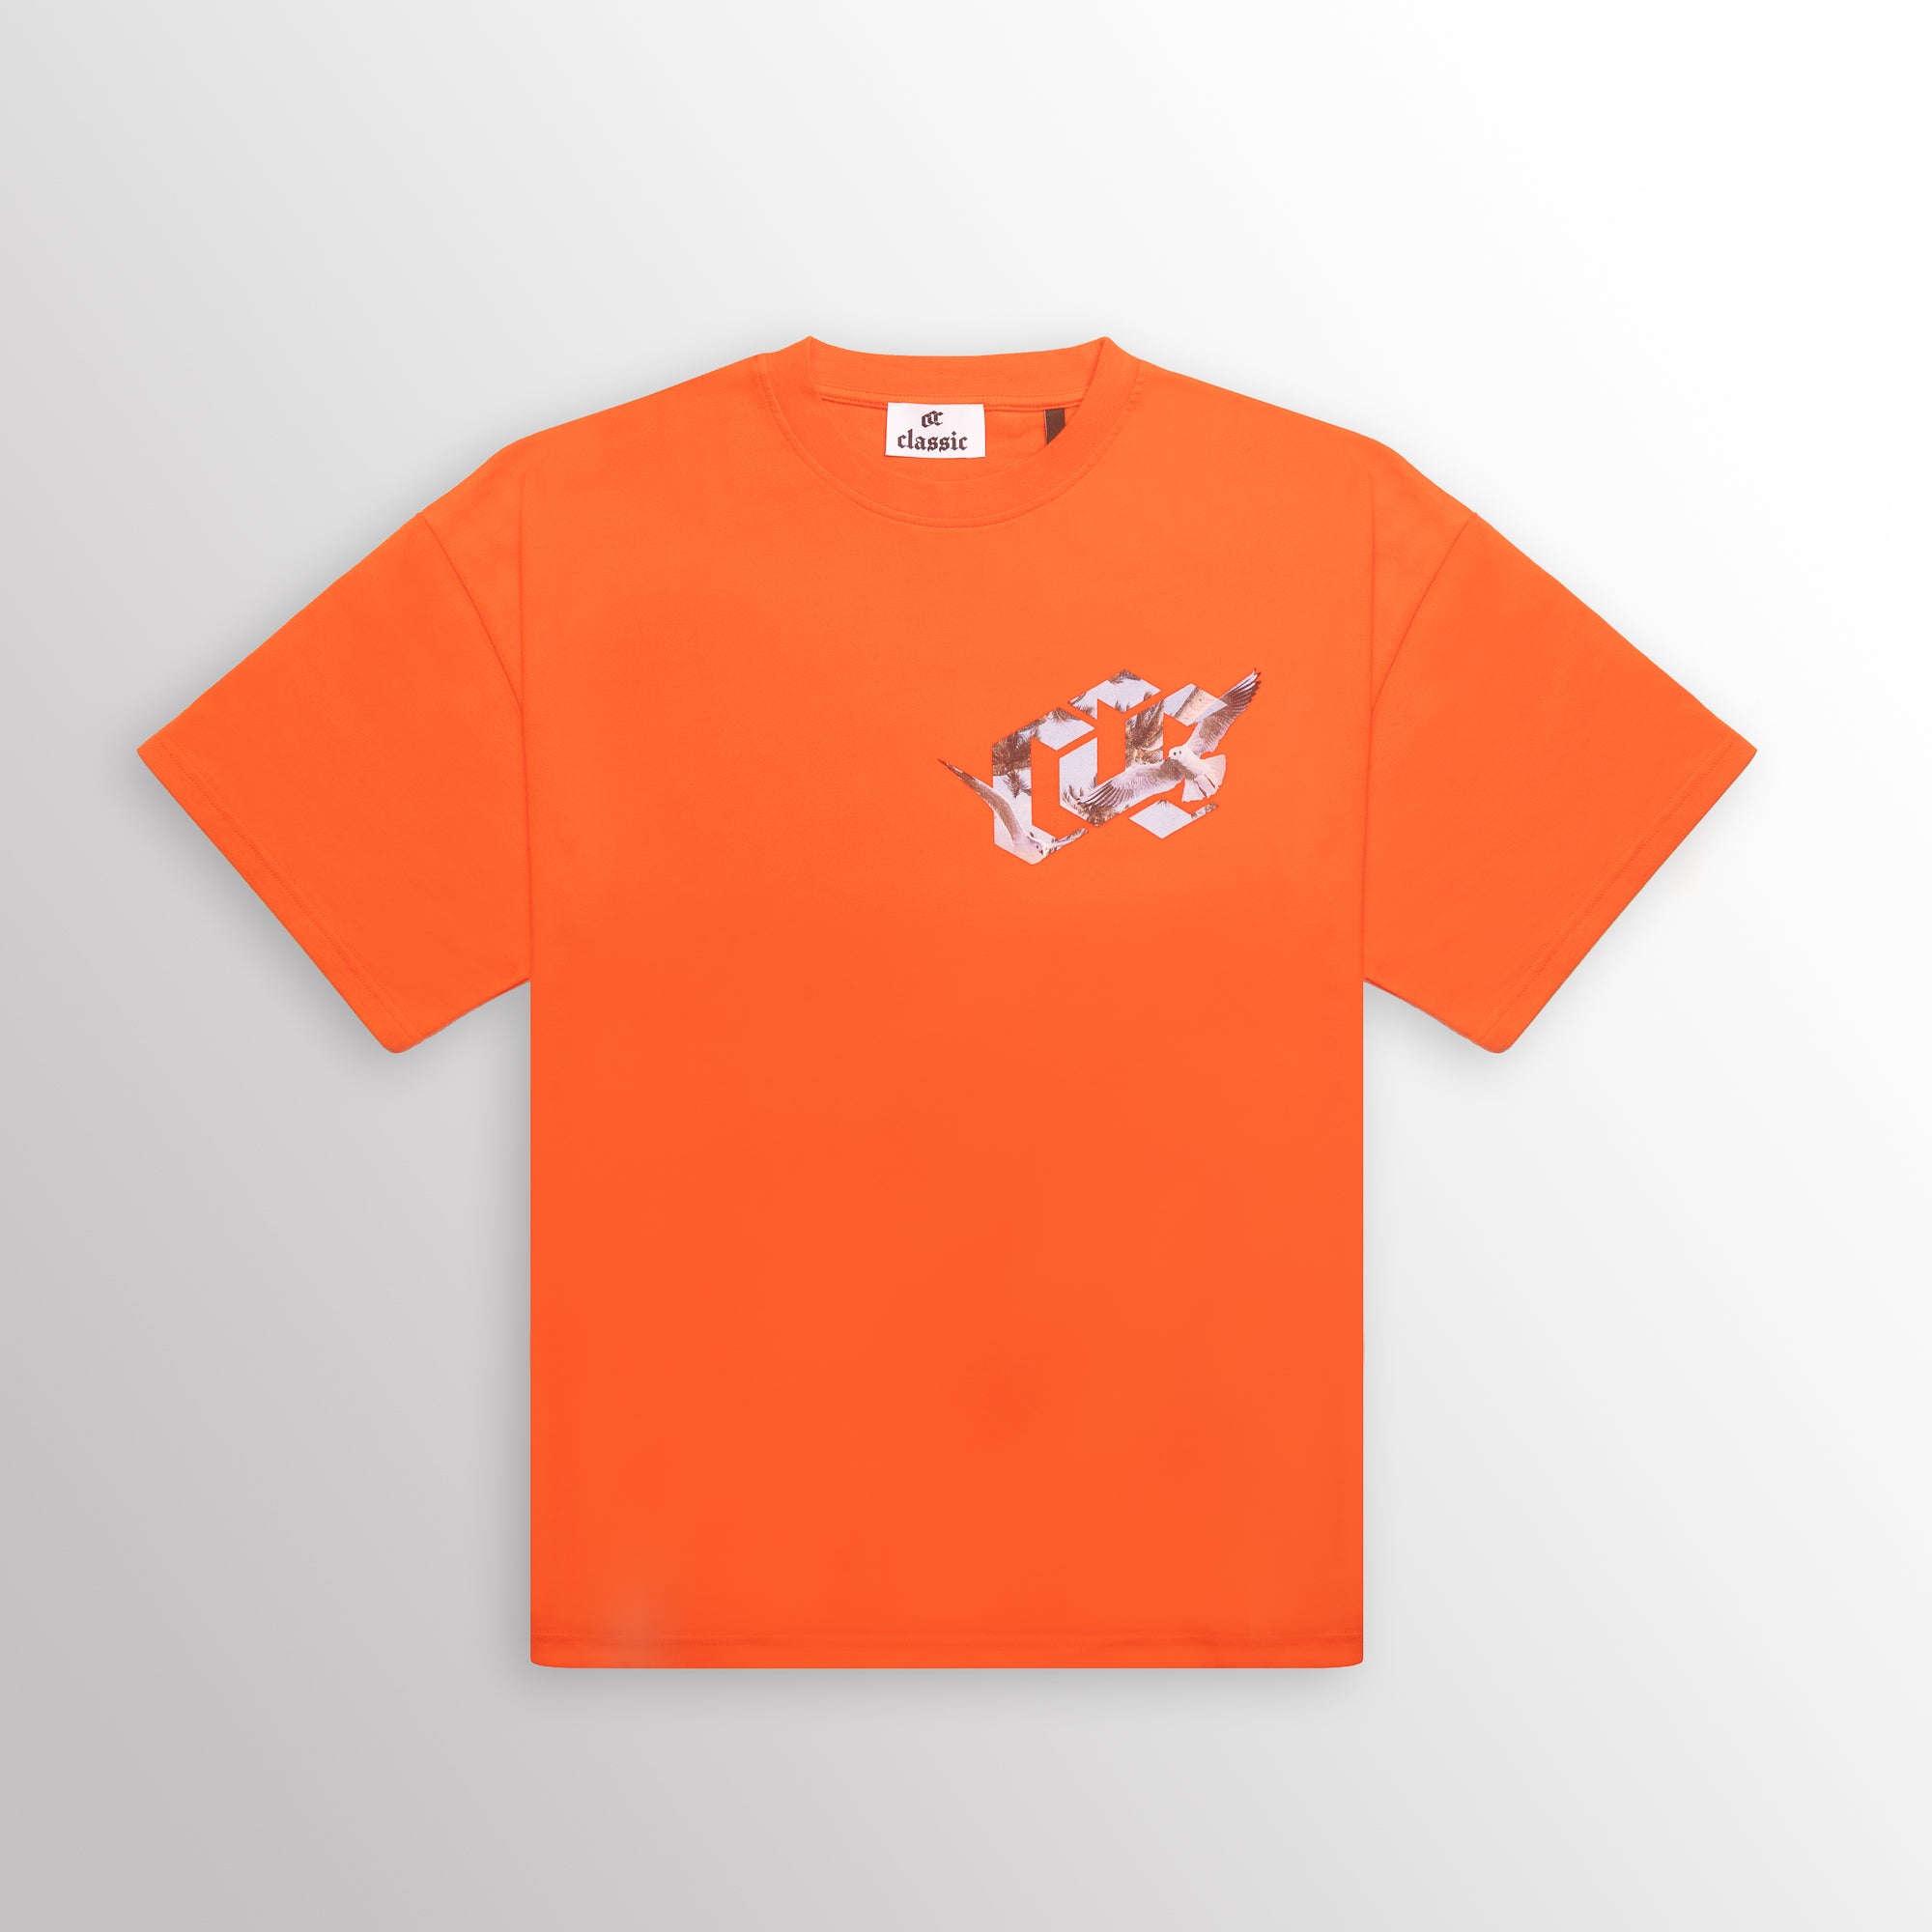 Hot Orange Shirt